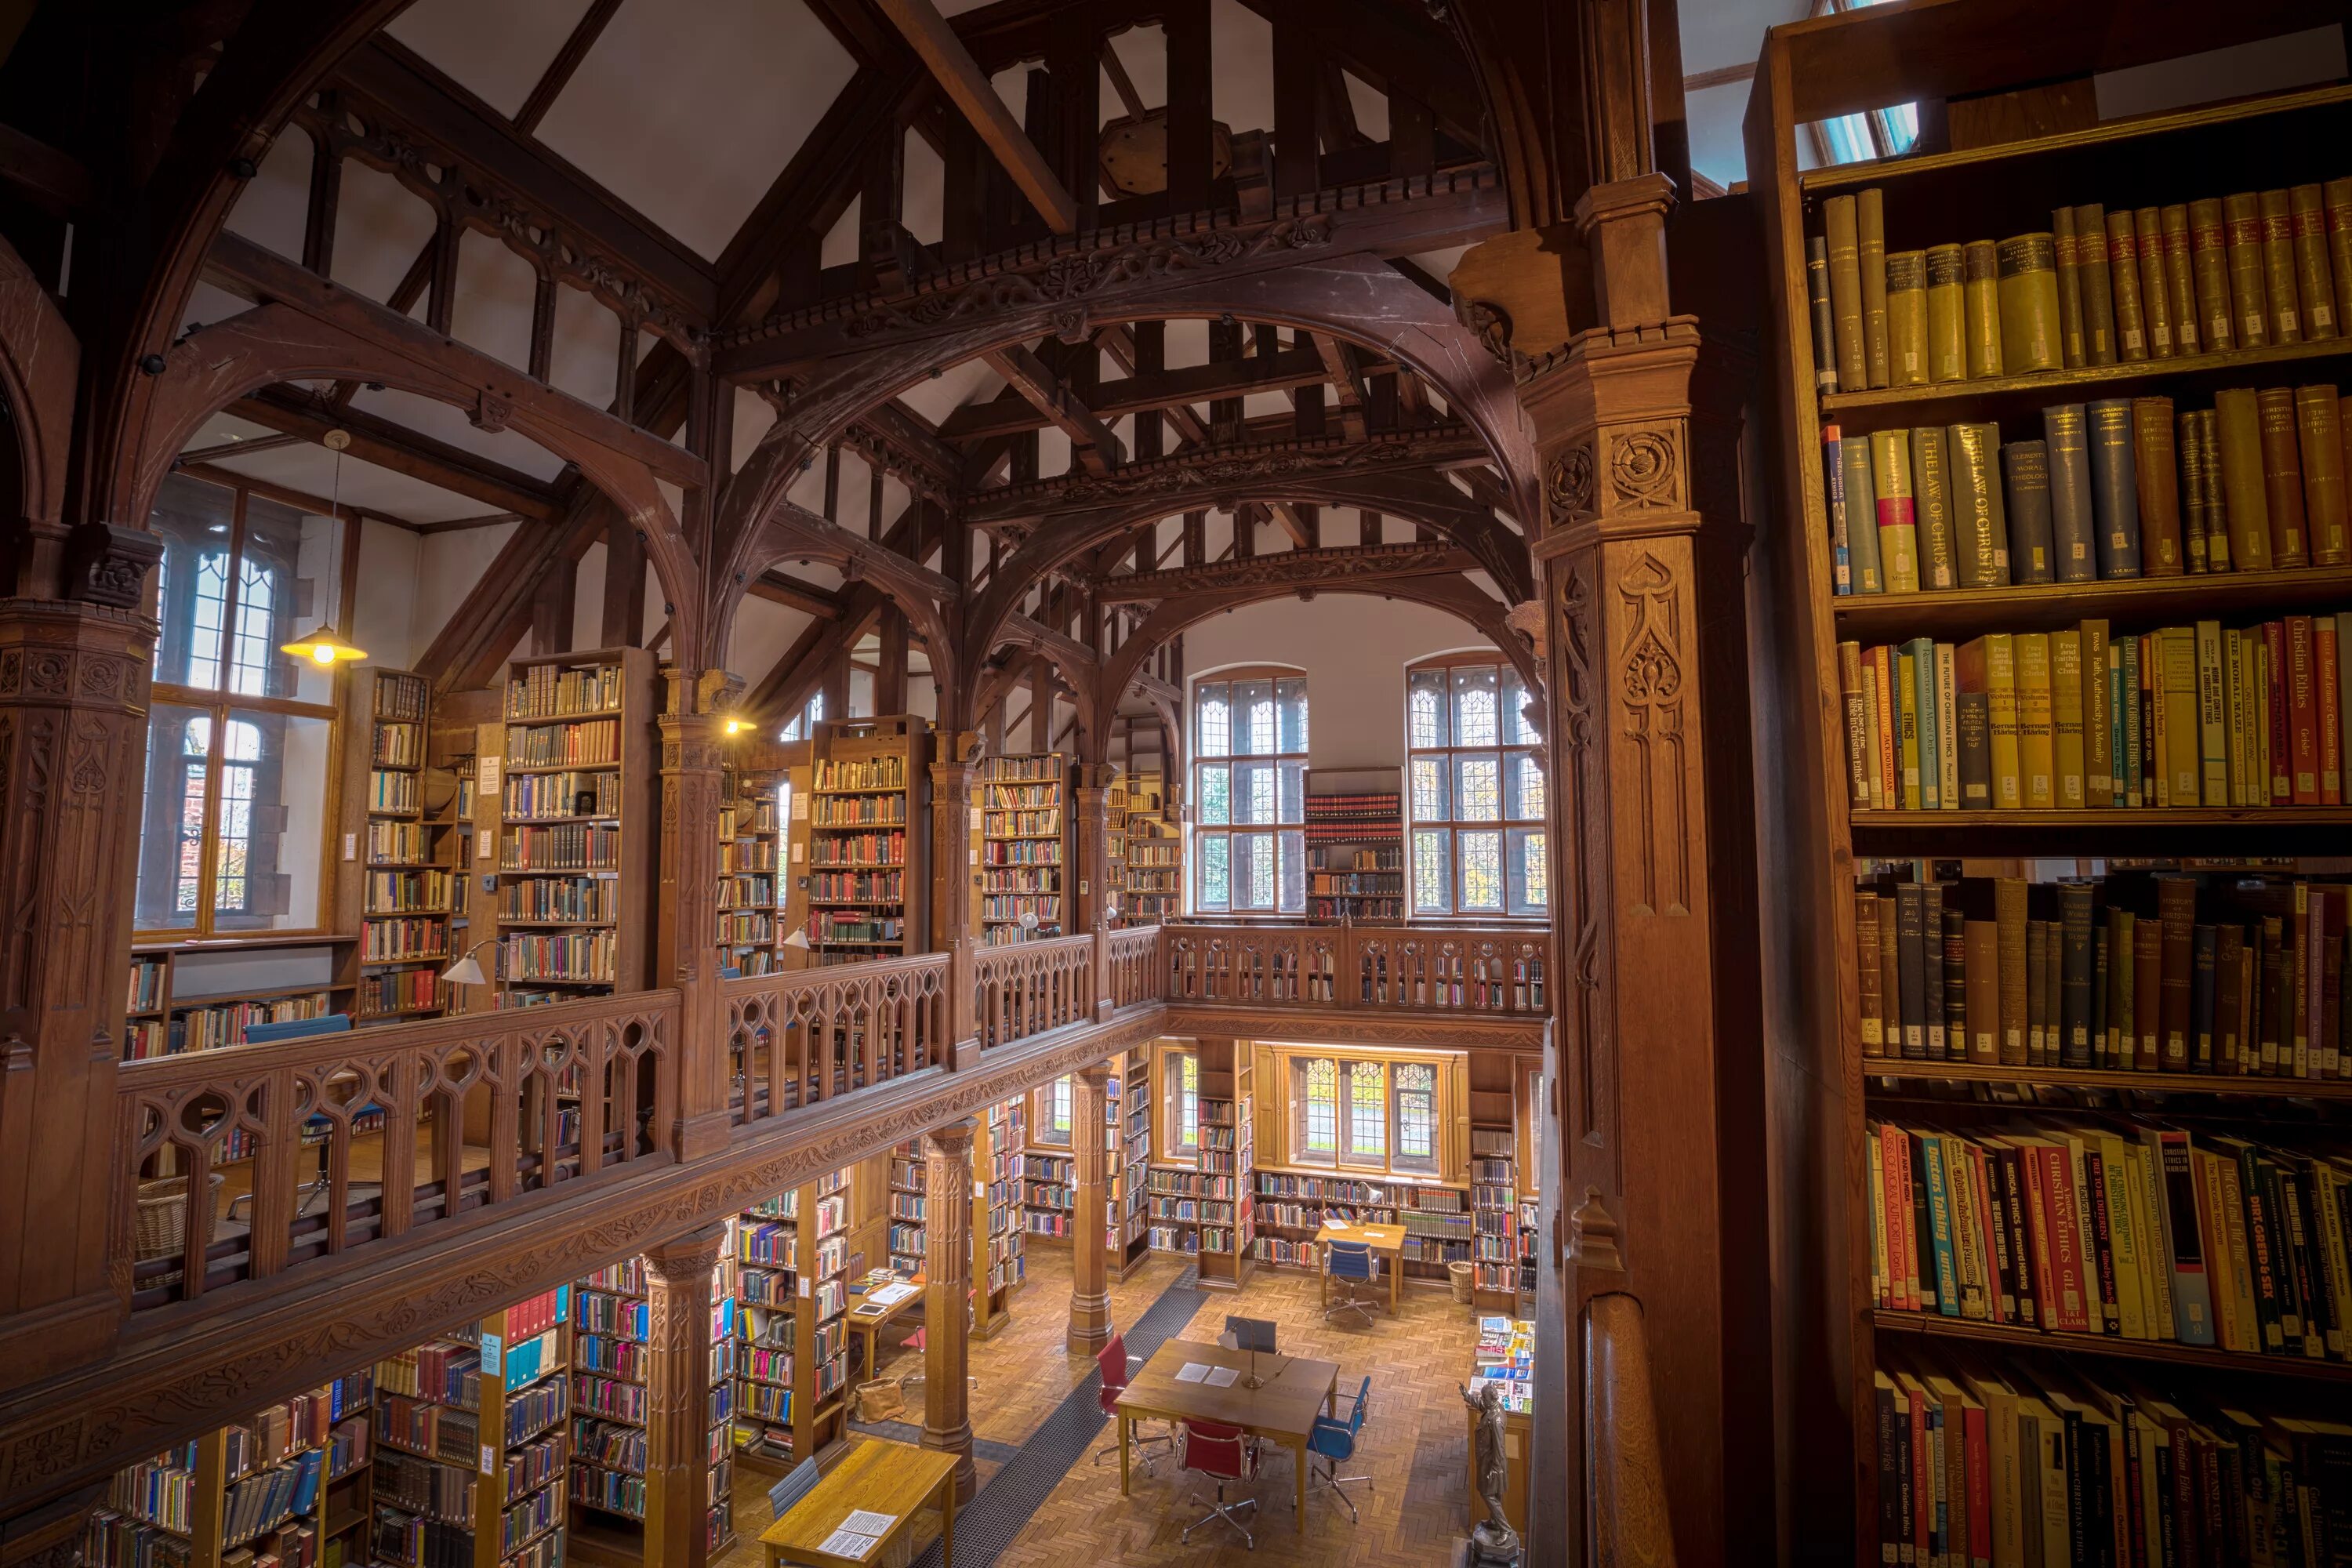 Библиотека Джорджа Пибоди, Балтимор, США. Библиотека аббатства Адмонт, Австрия. Старинная библиотека. Picture libraries